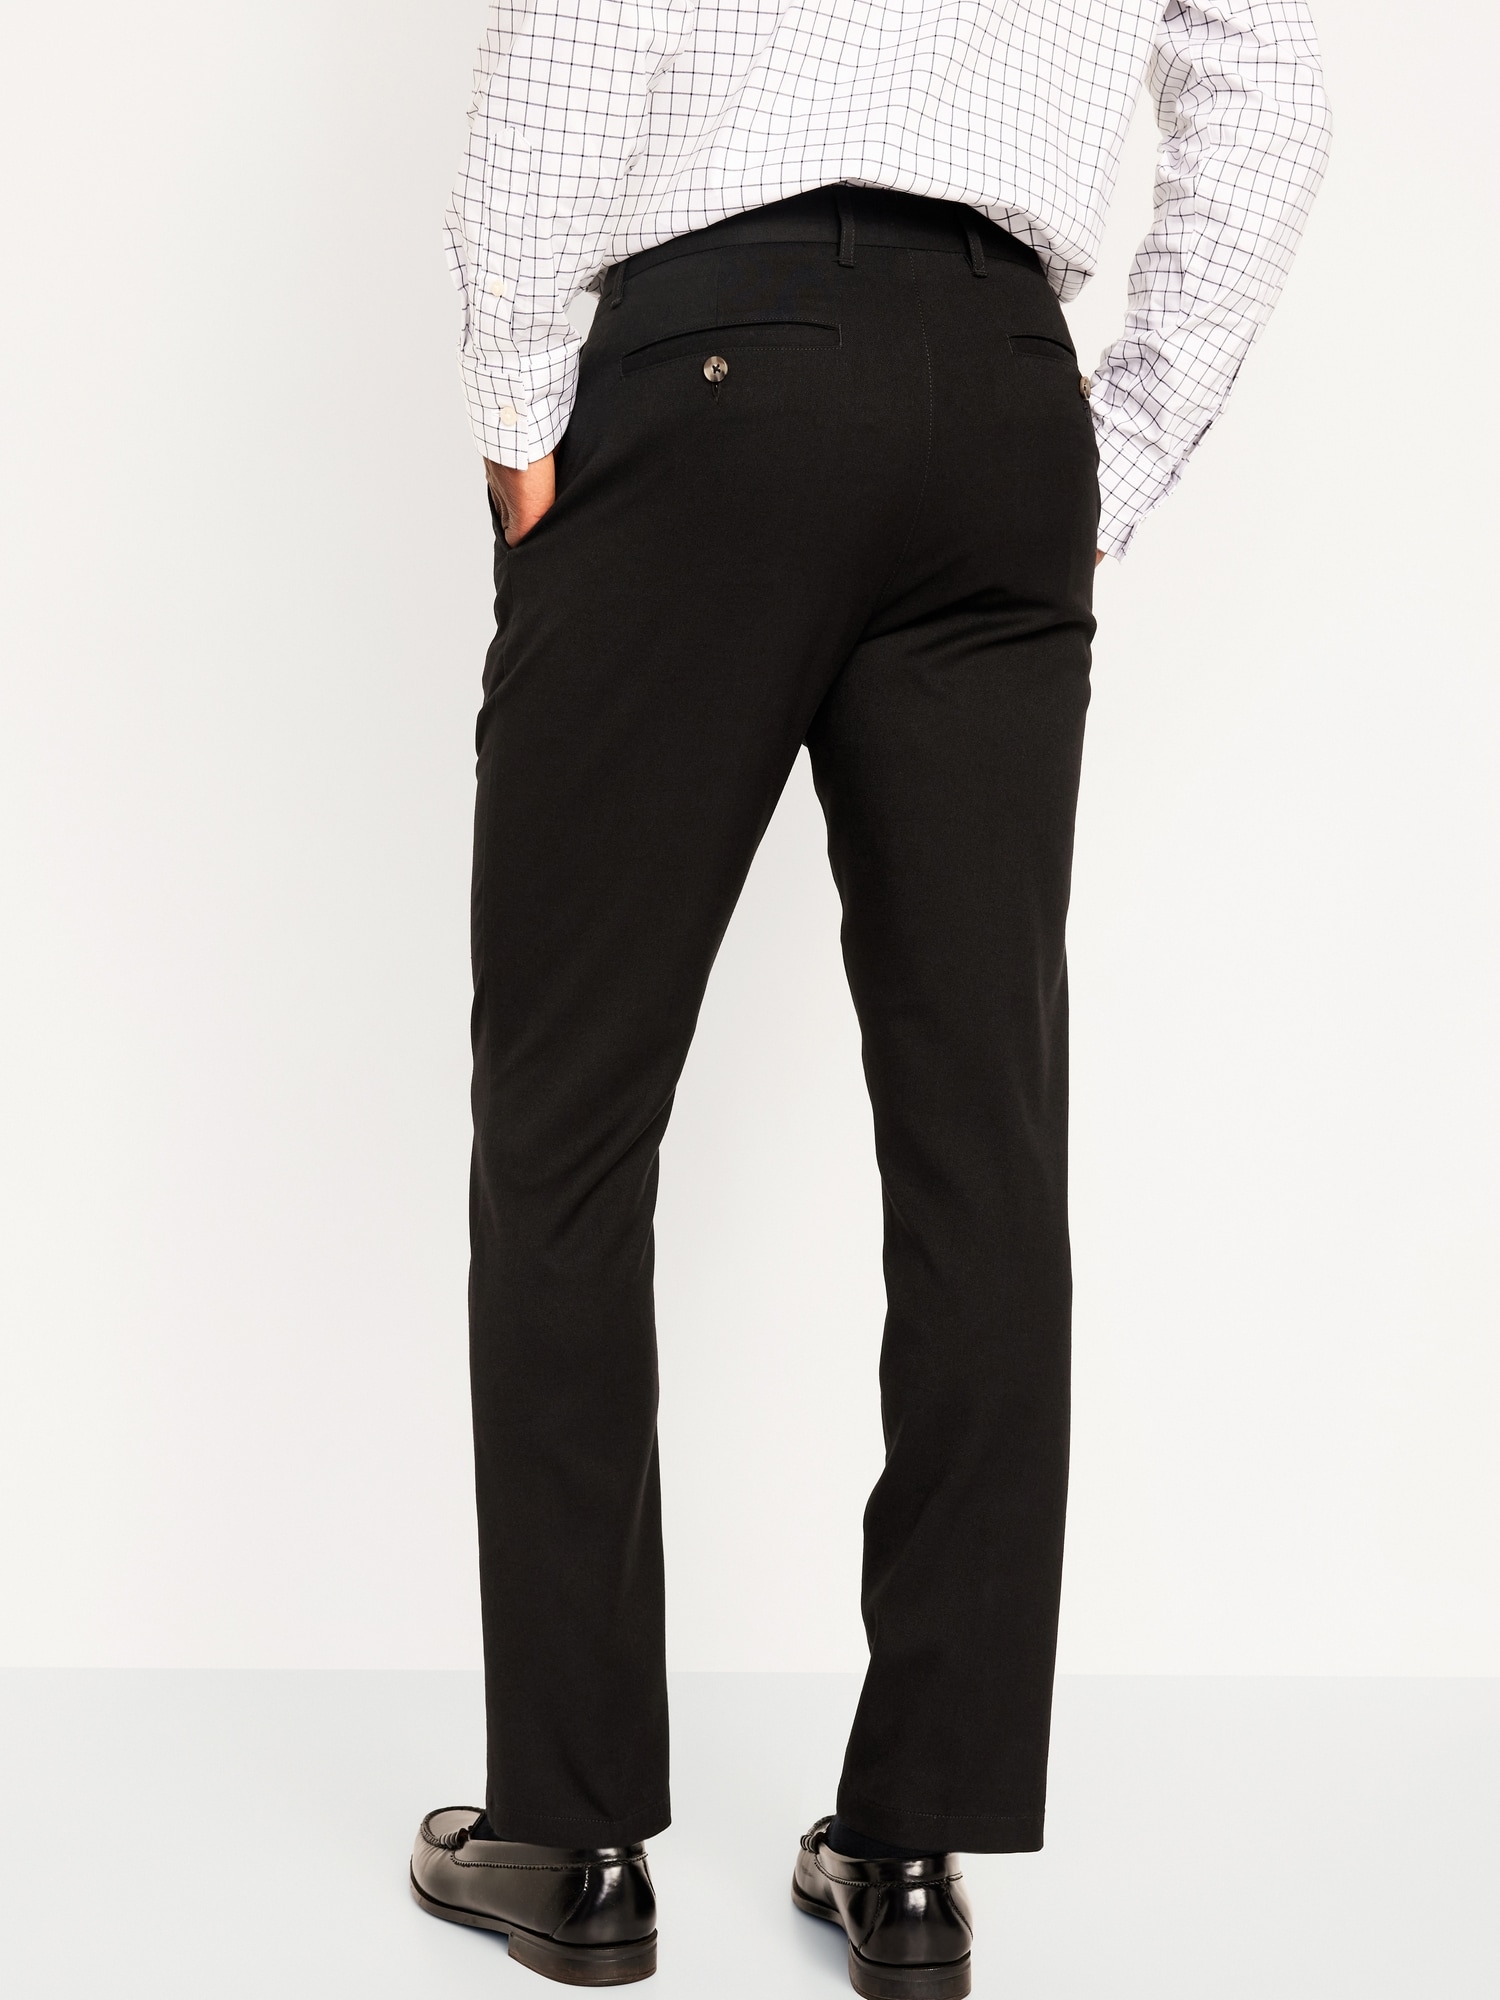 Express Men's Slim Black Wool-Blend Cargo Dress Pants Black W28 L32 |  CoolSprings Galleria